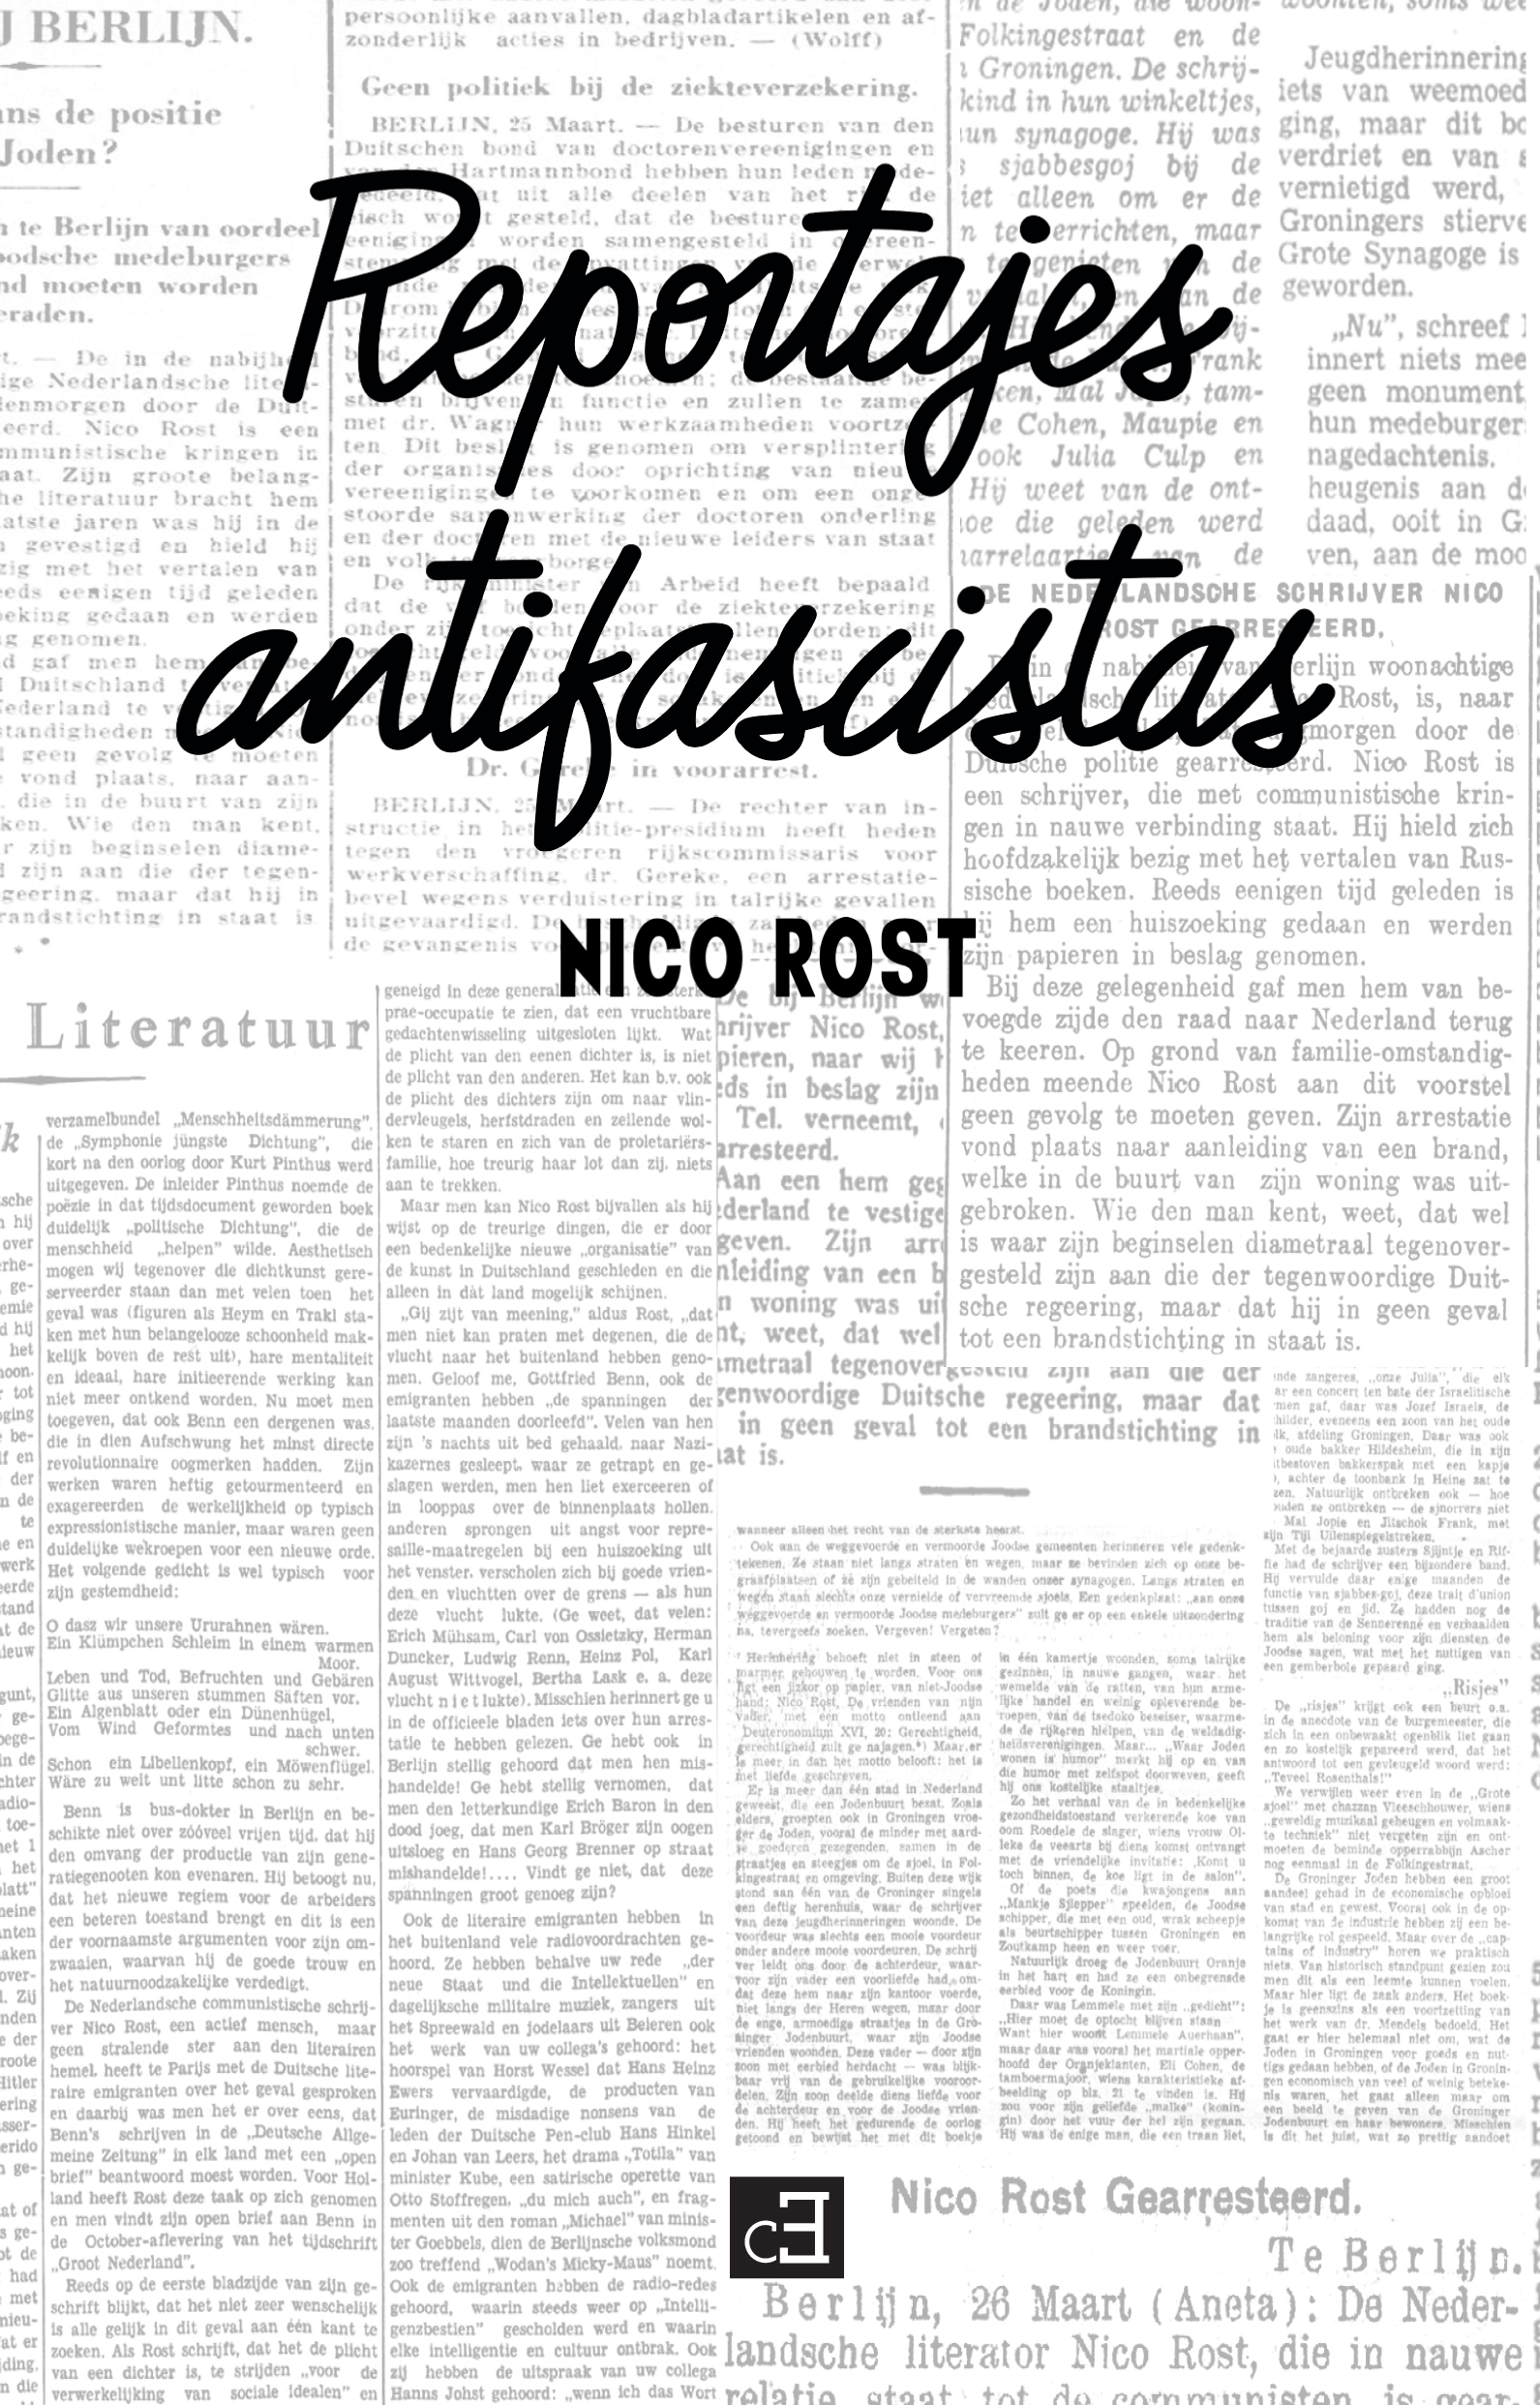 REPORTAJES ANTIFASCISTAS - Nico Rost